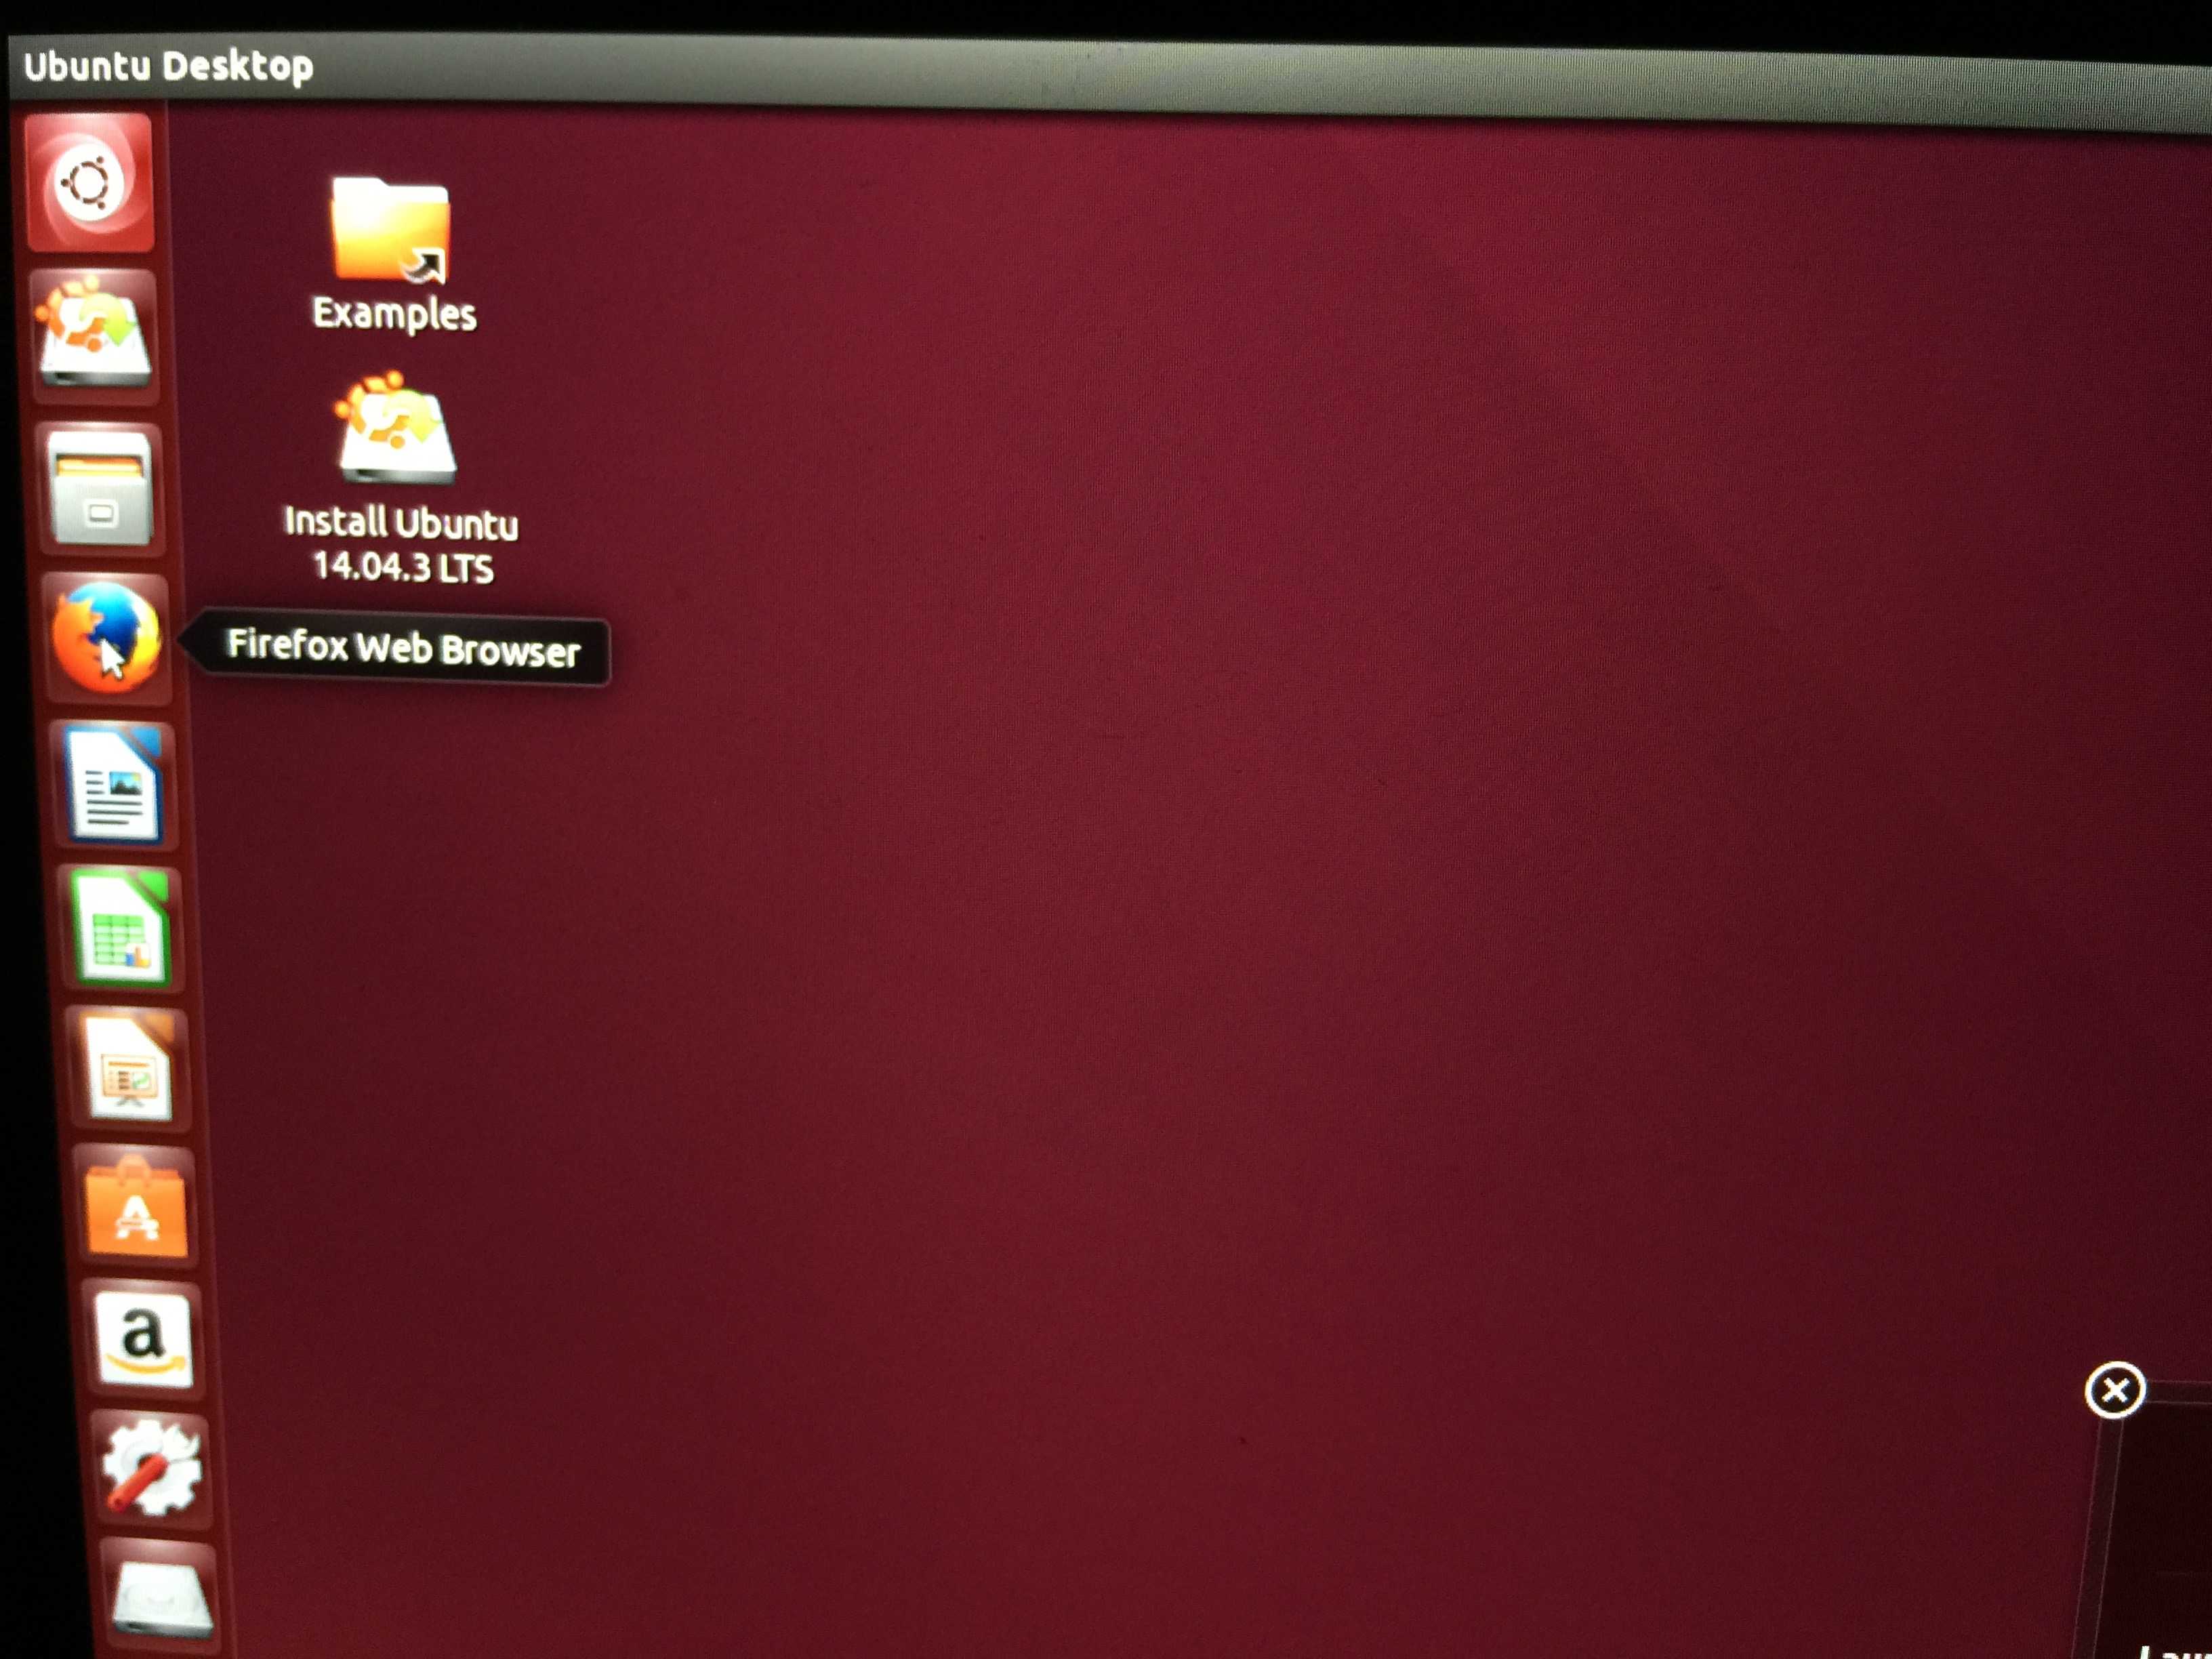 Ubuntu running on my Macbook Pro -- beautiful.